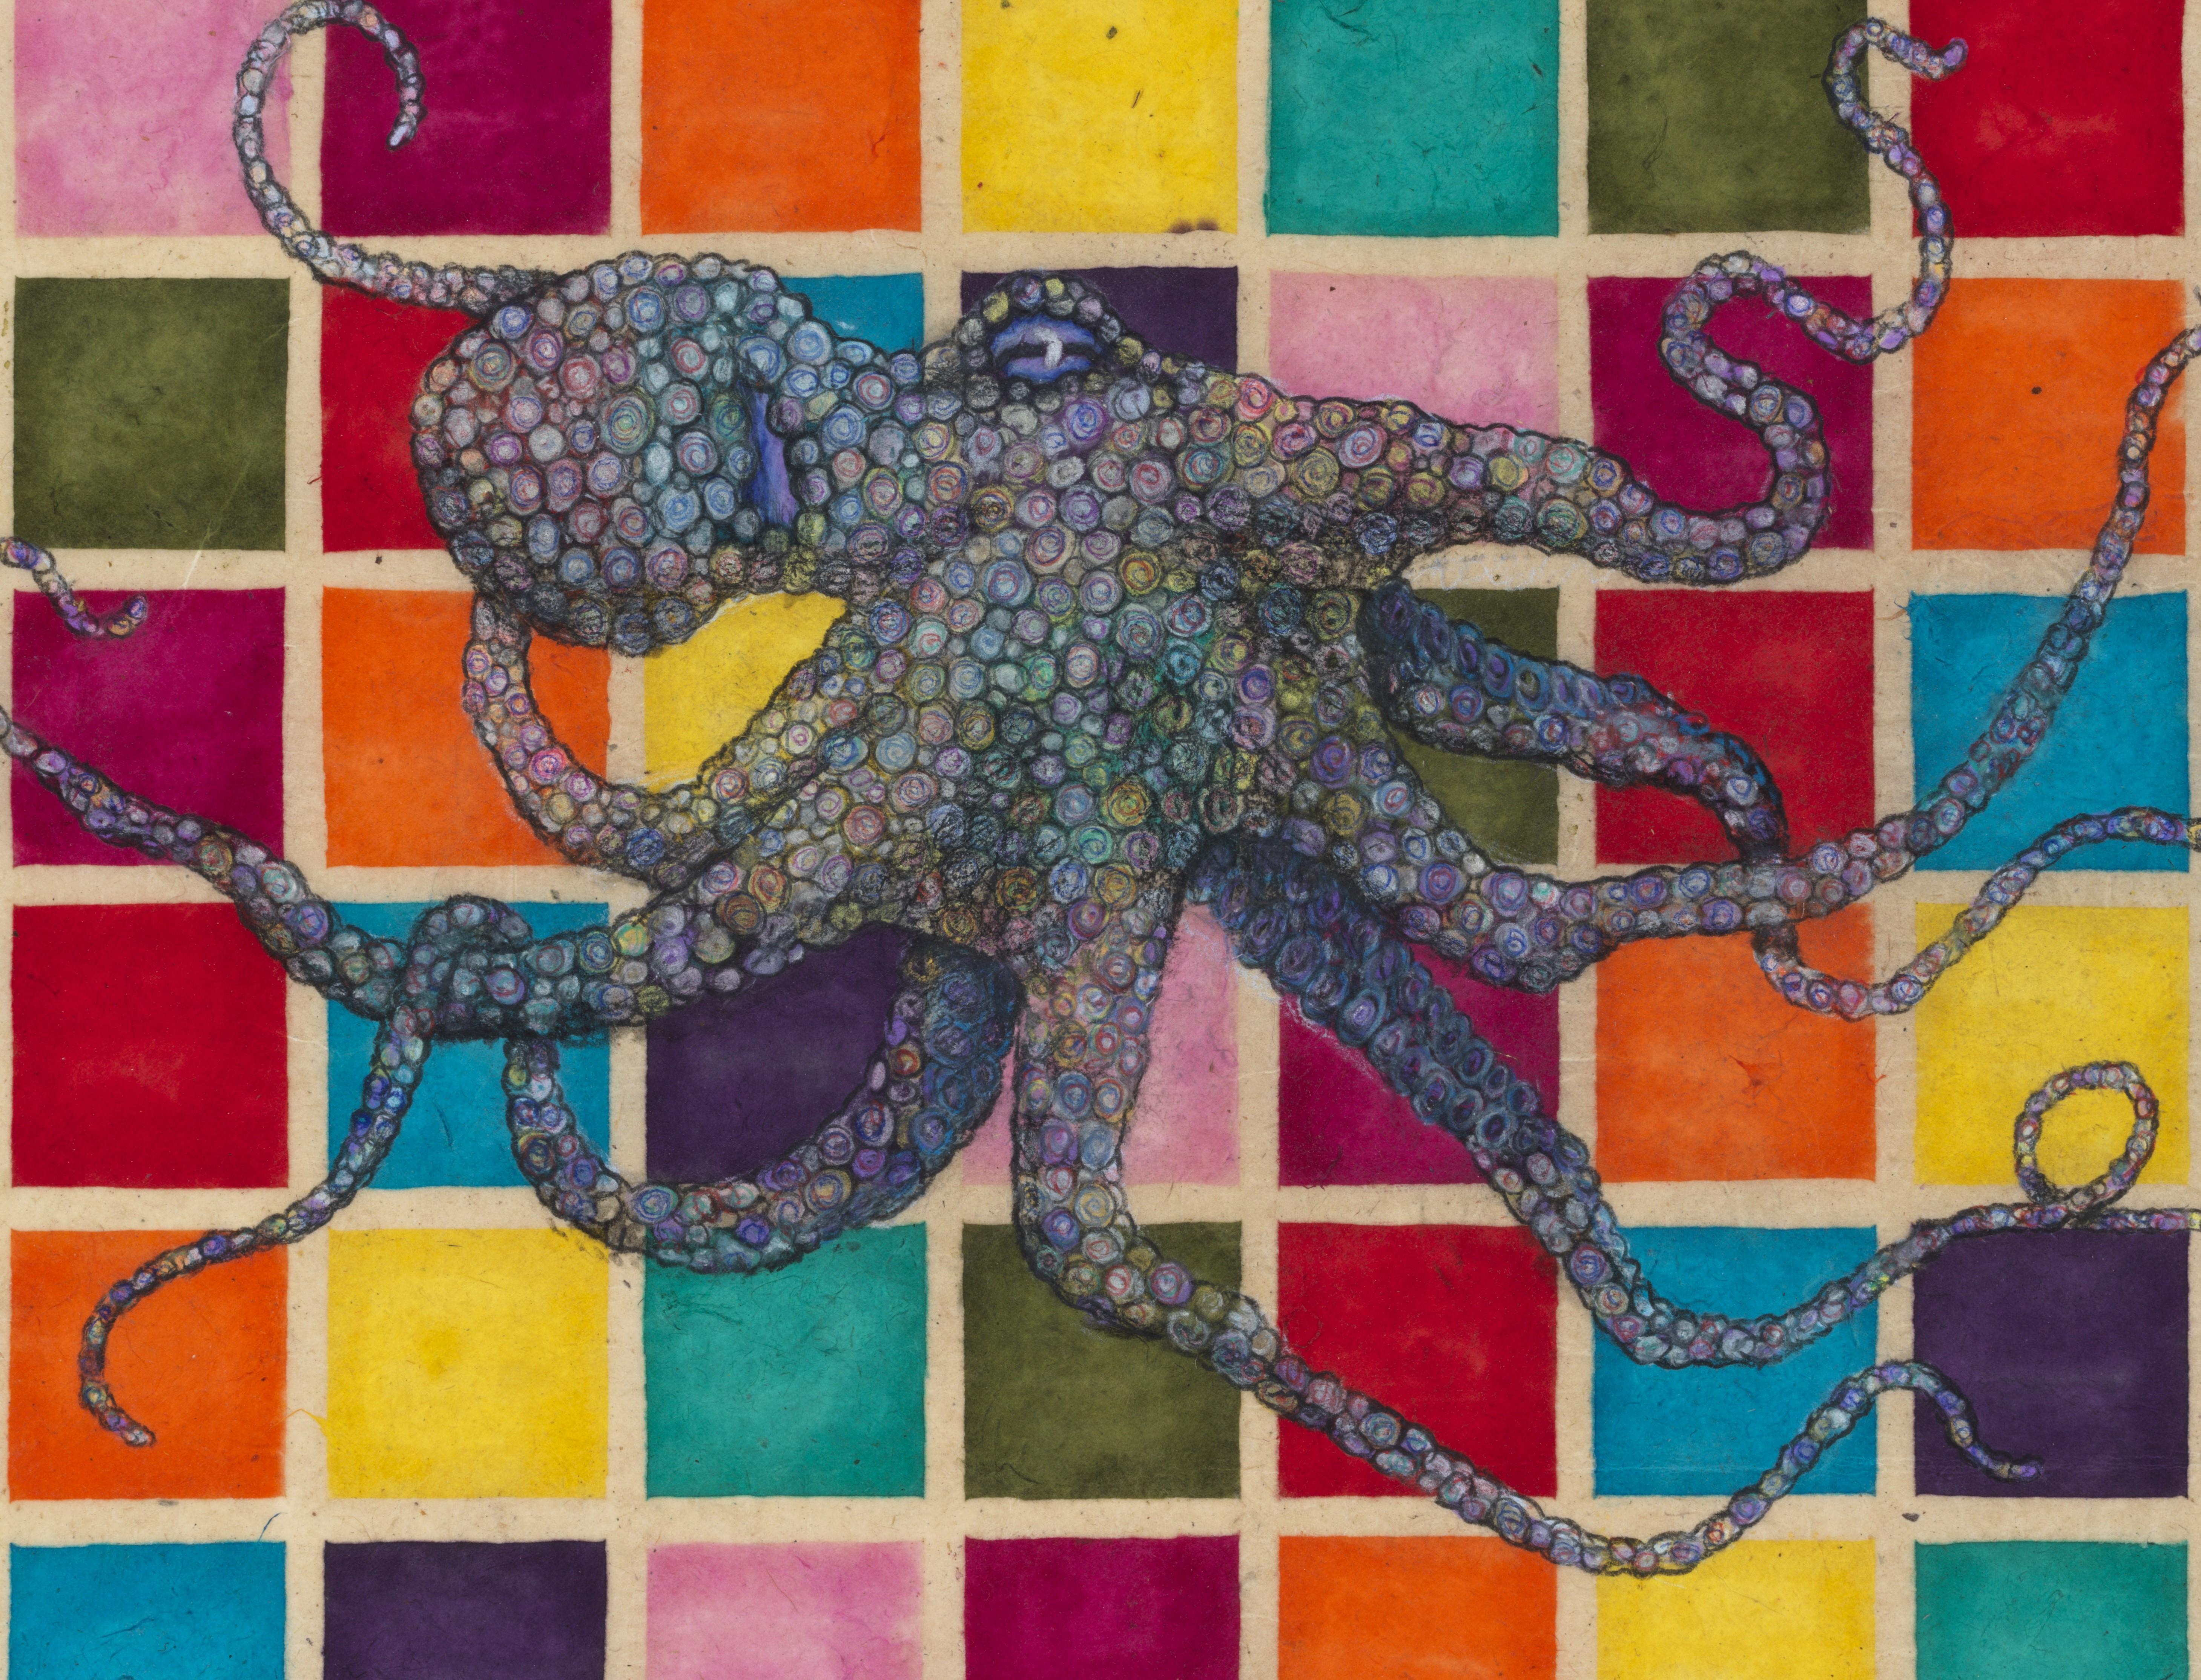 Studio 54 - Code Blue - Gyotaku Style Sumi Ink Painting of an Octopus  - Orange Animal Painting by Jeff Conroy